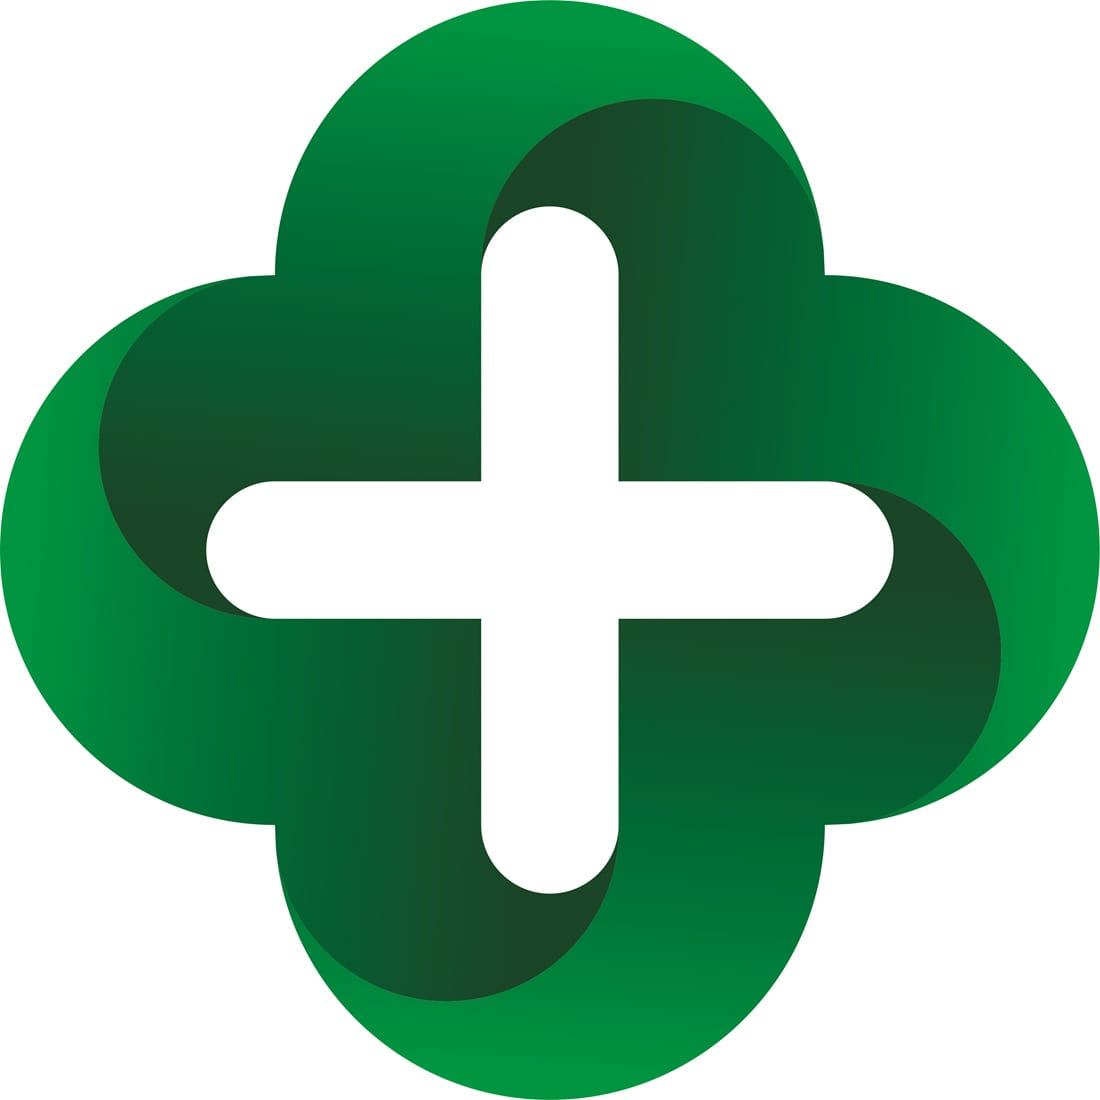 Medical logo preview image.